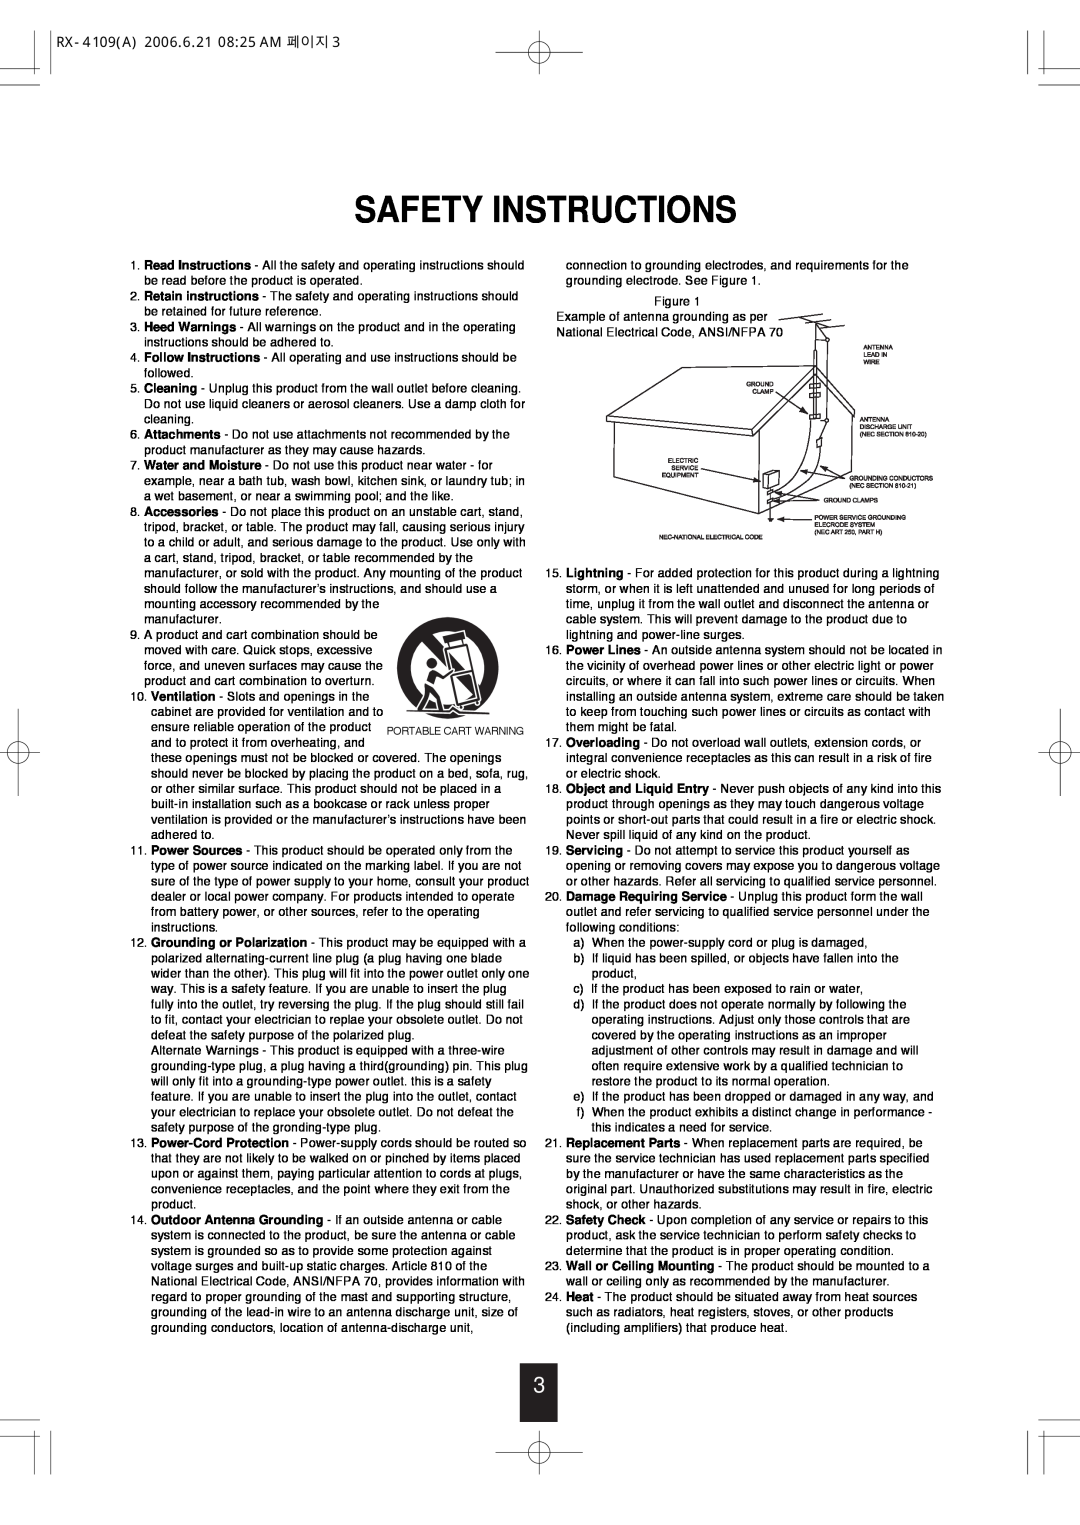 Sherwood manual Safety Instructions, RX-4109A 2006.6.21 0825 AM 페이지 